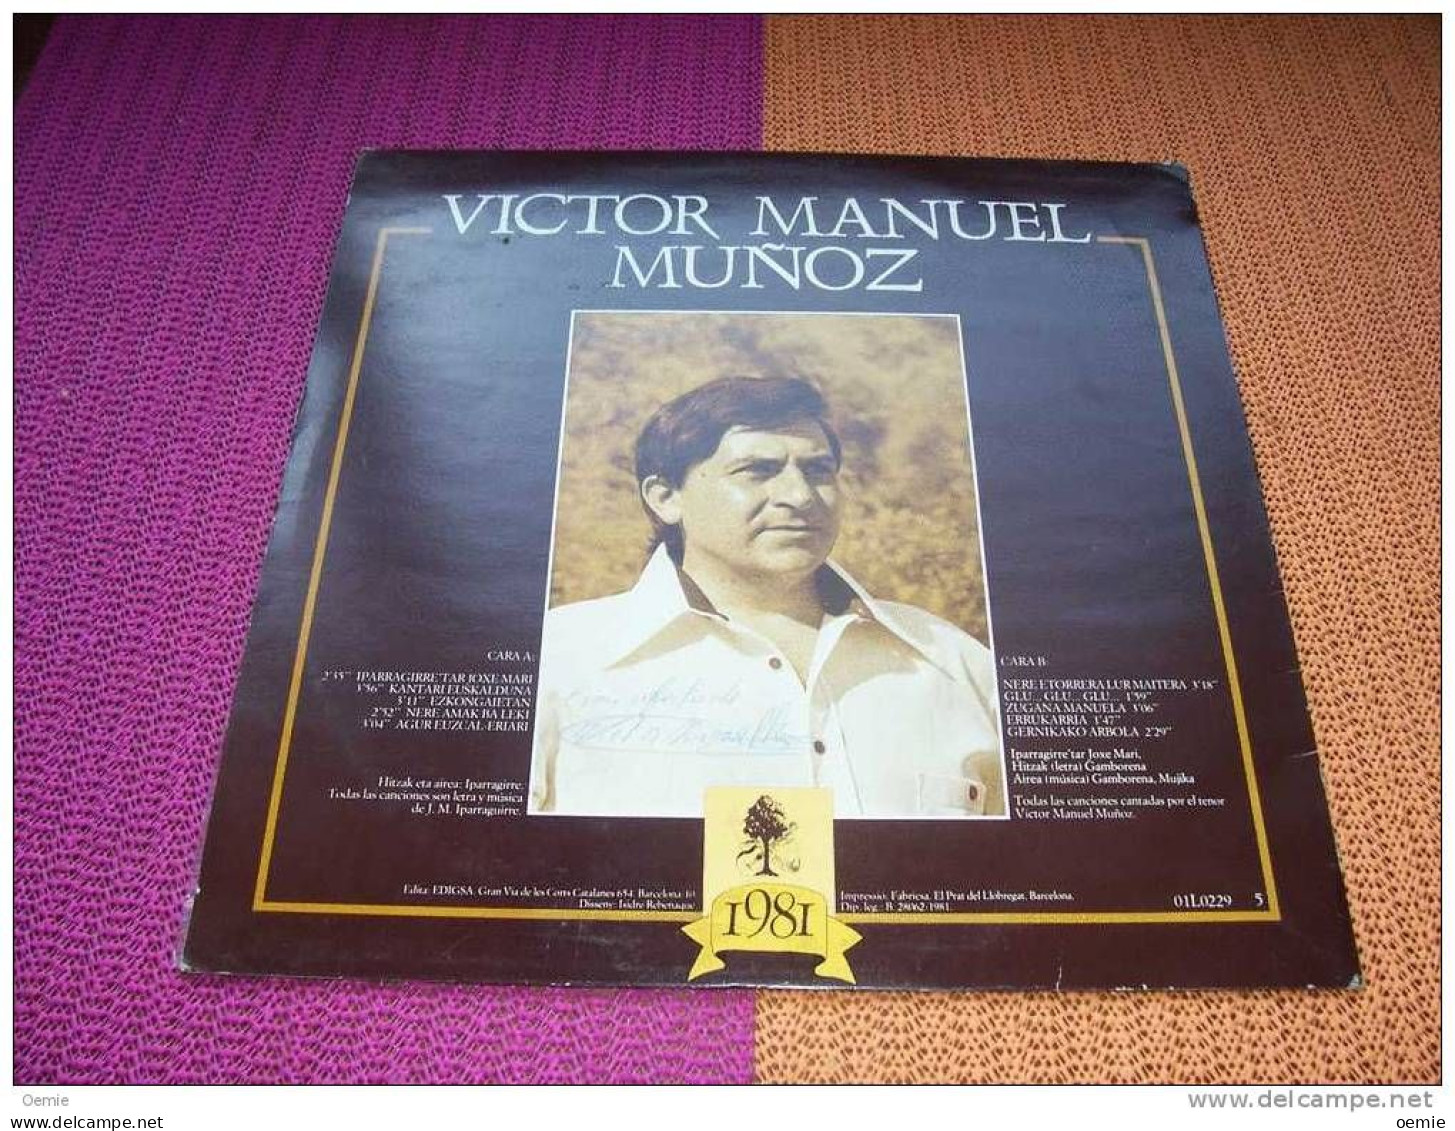 VICTOR MANUEL MUNOZ  / IPARRAGIRRE'TAR  JOXE MARI - Autres - Musique Espagnole